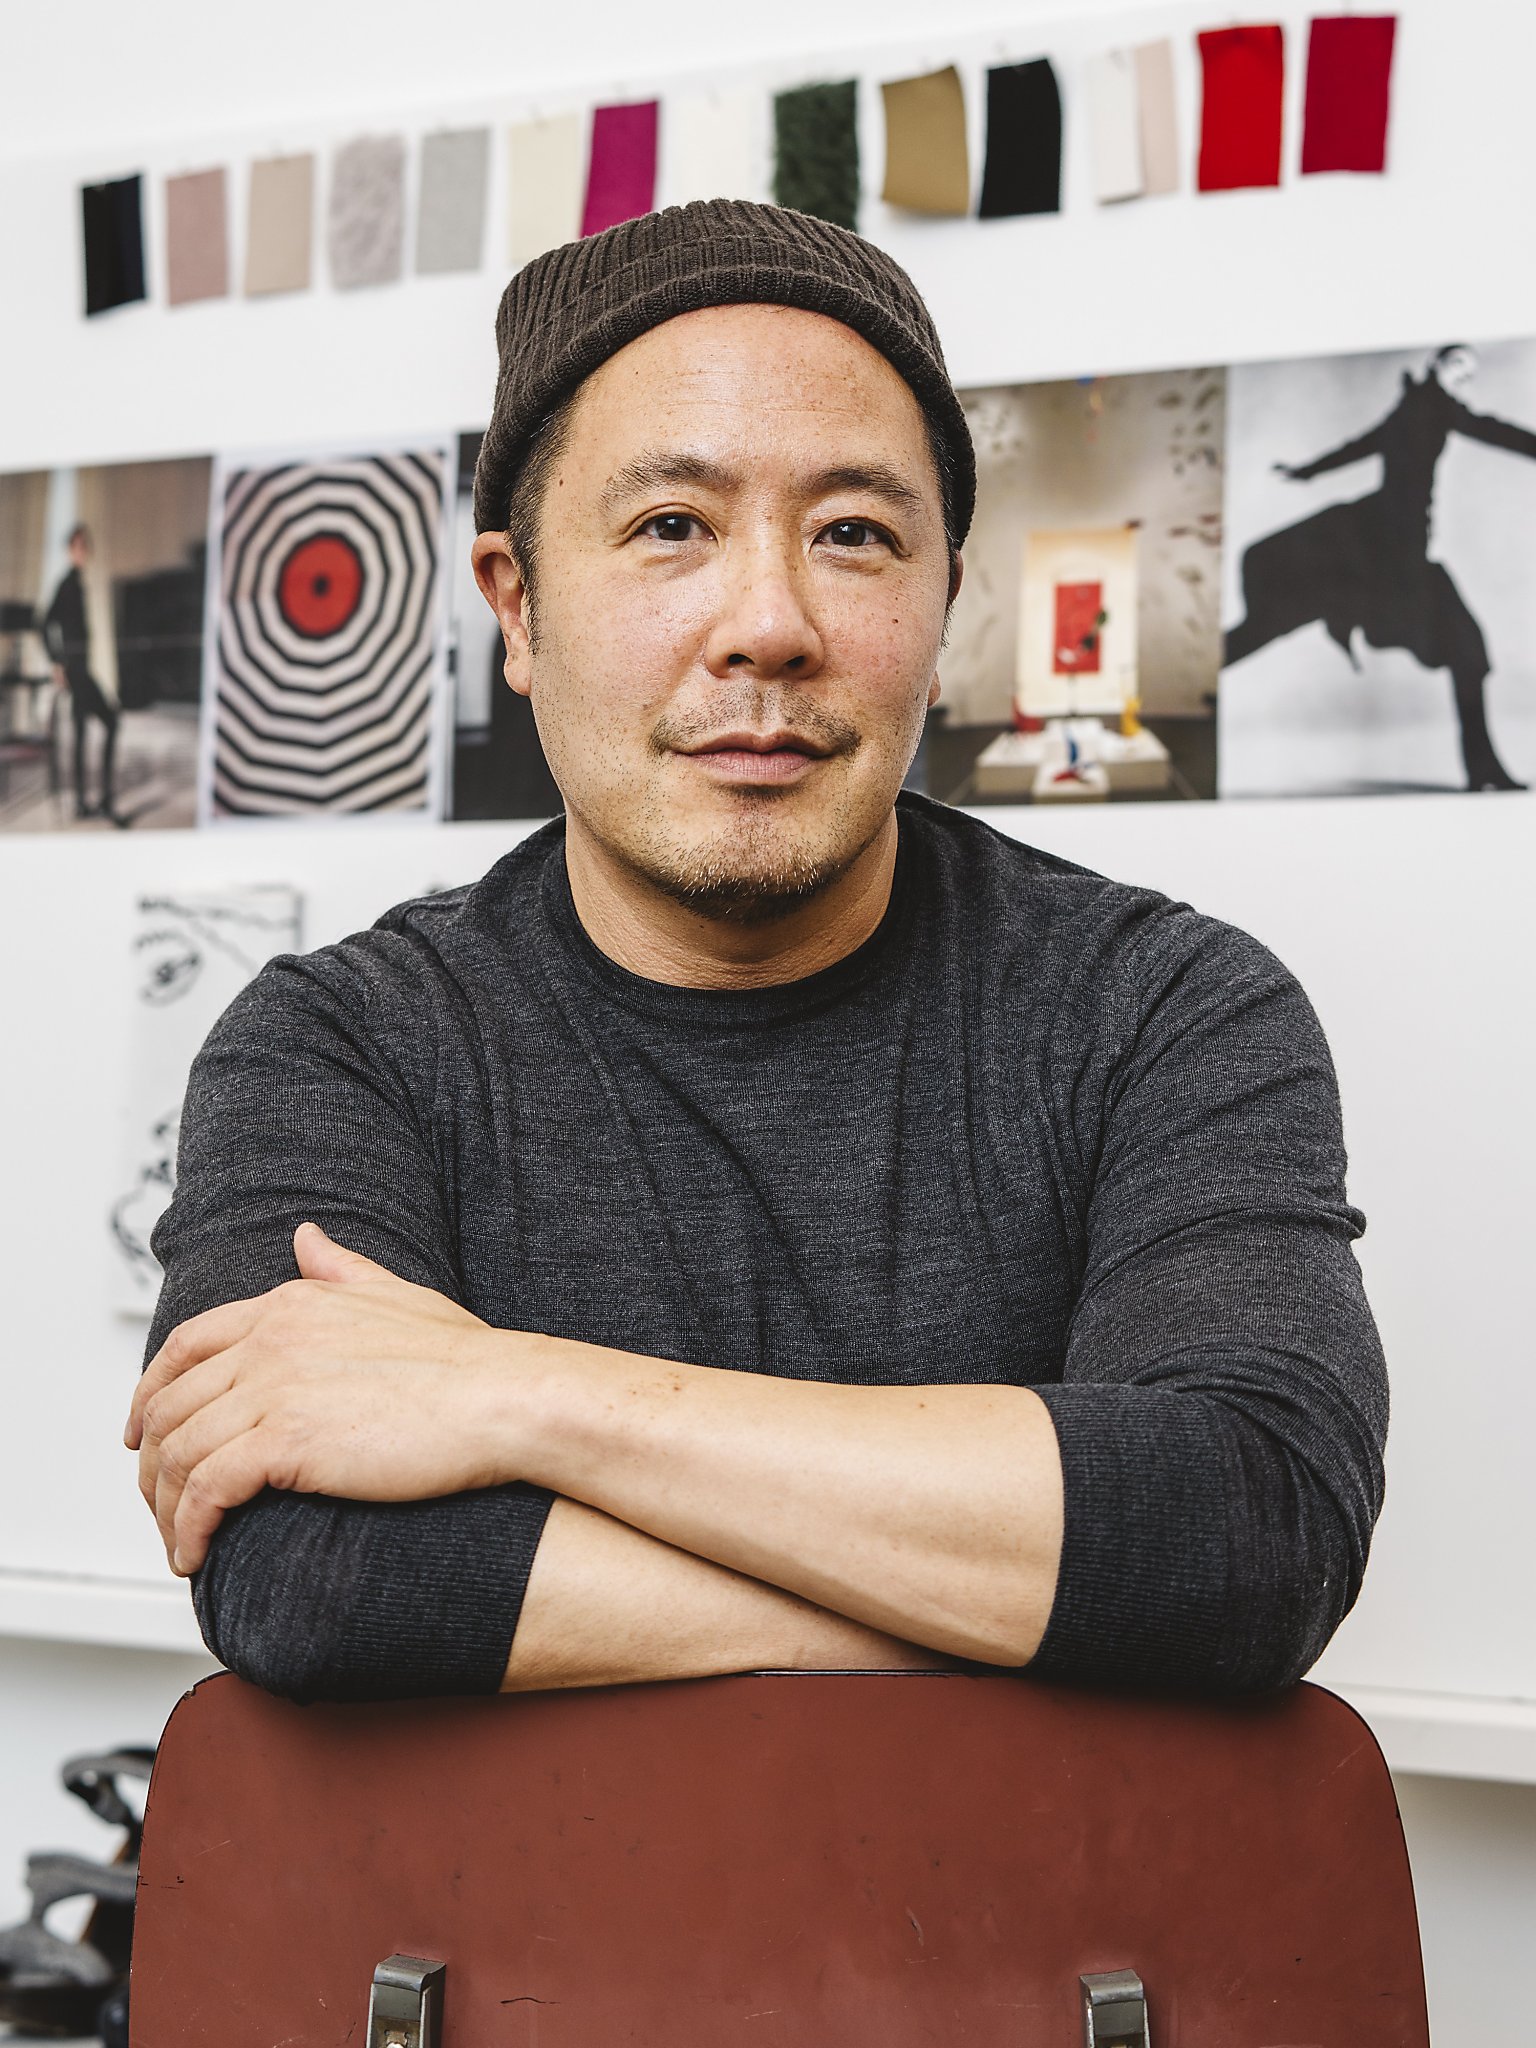 Derek Lam: SF-born designer who built an empire